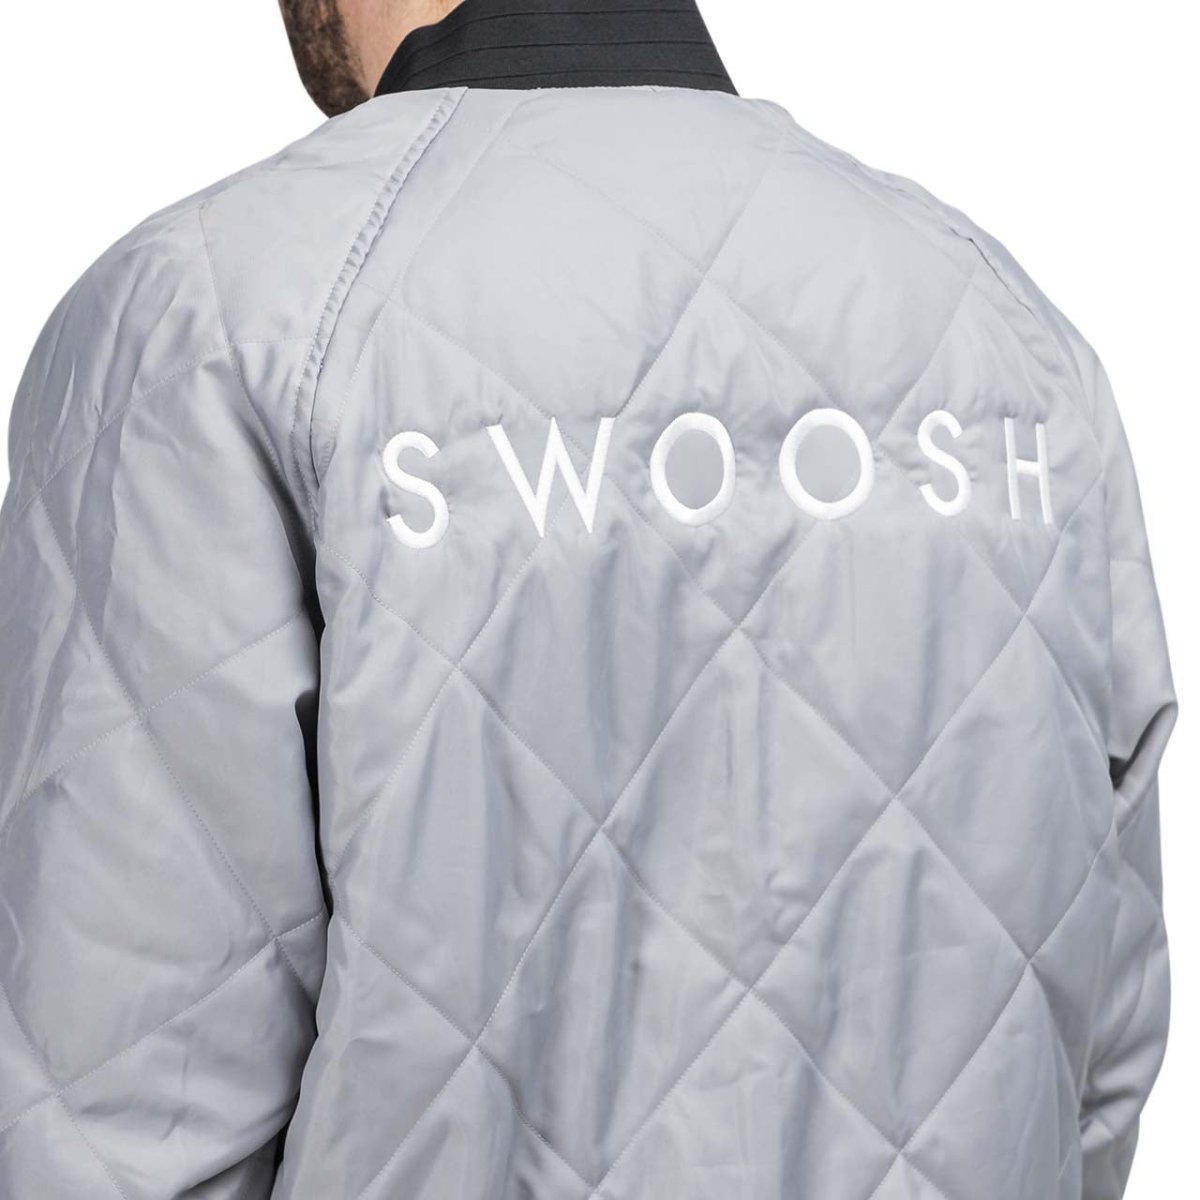 Nike Swoosh Reversible Woven Bomber Jacket (Schwarz)  - Allike Store